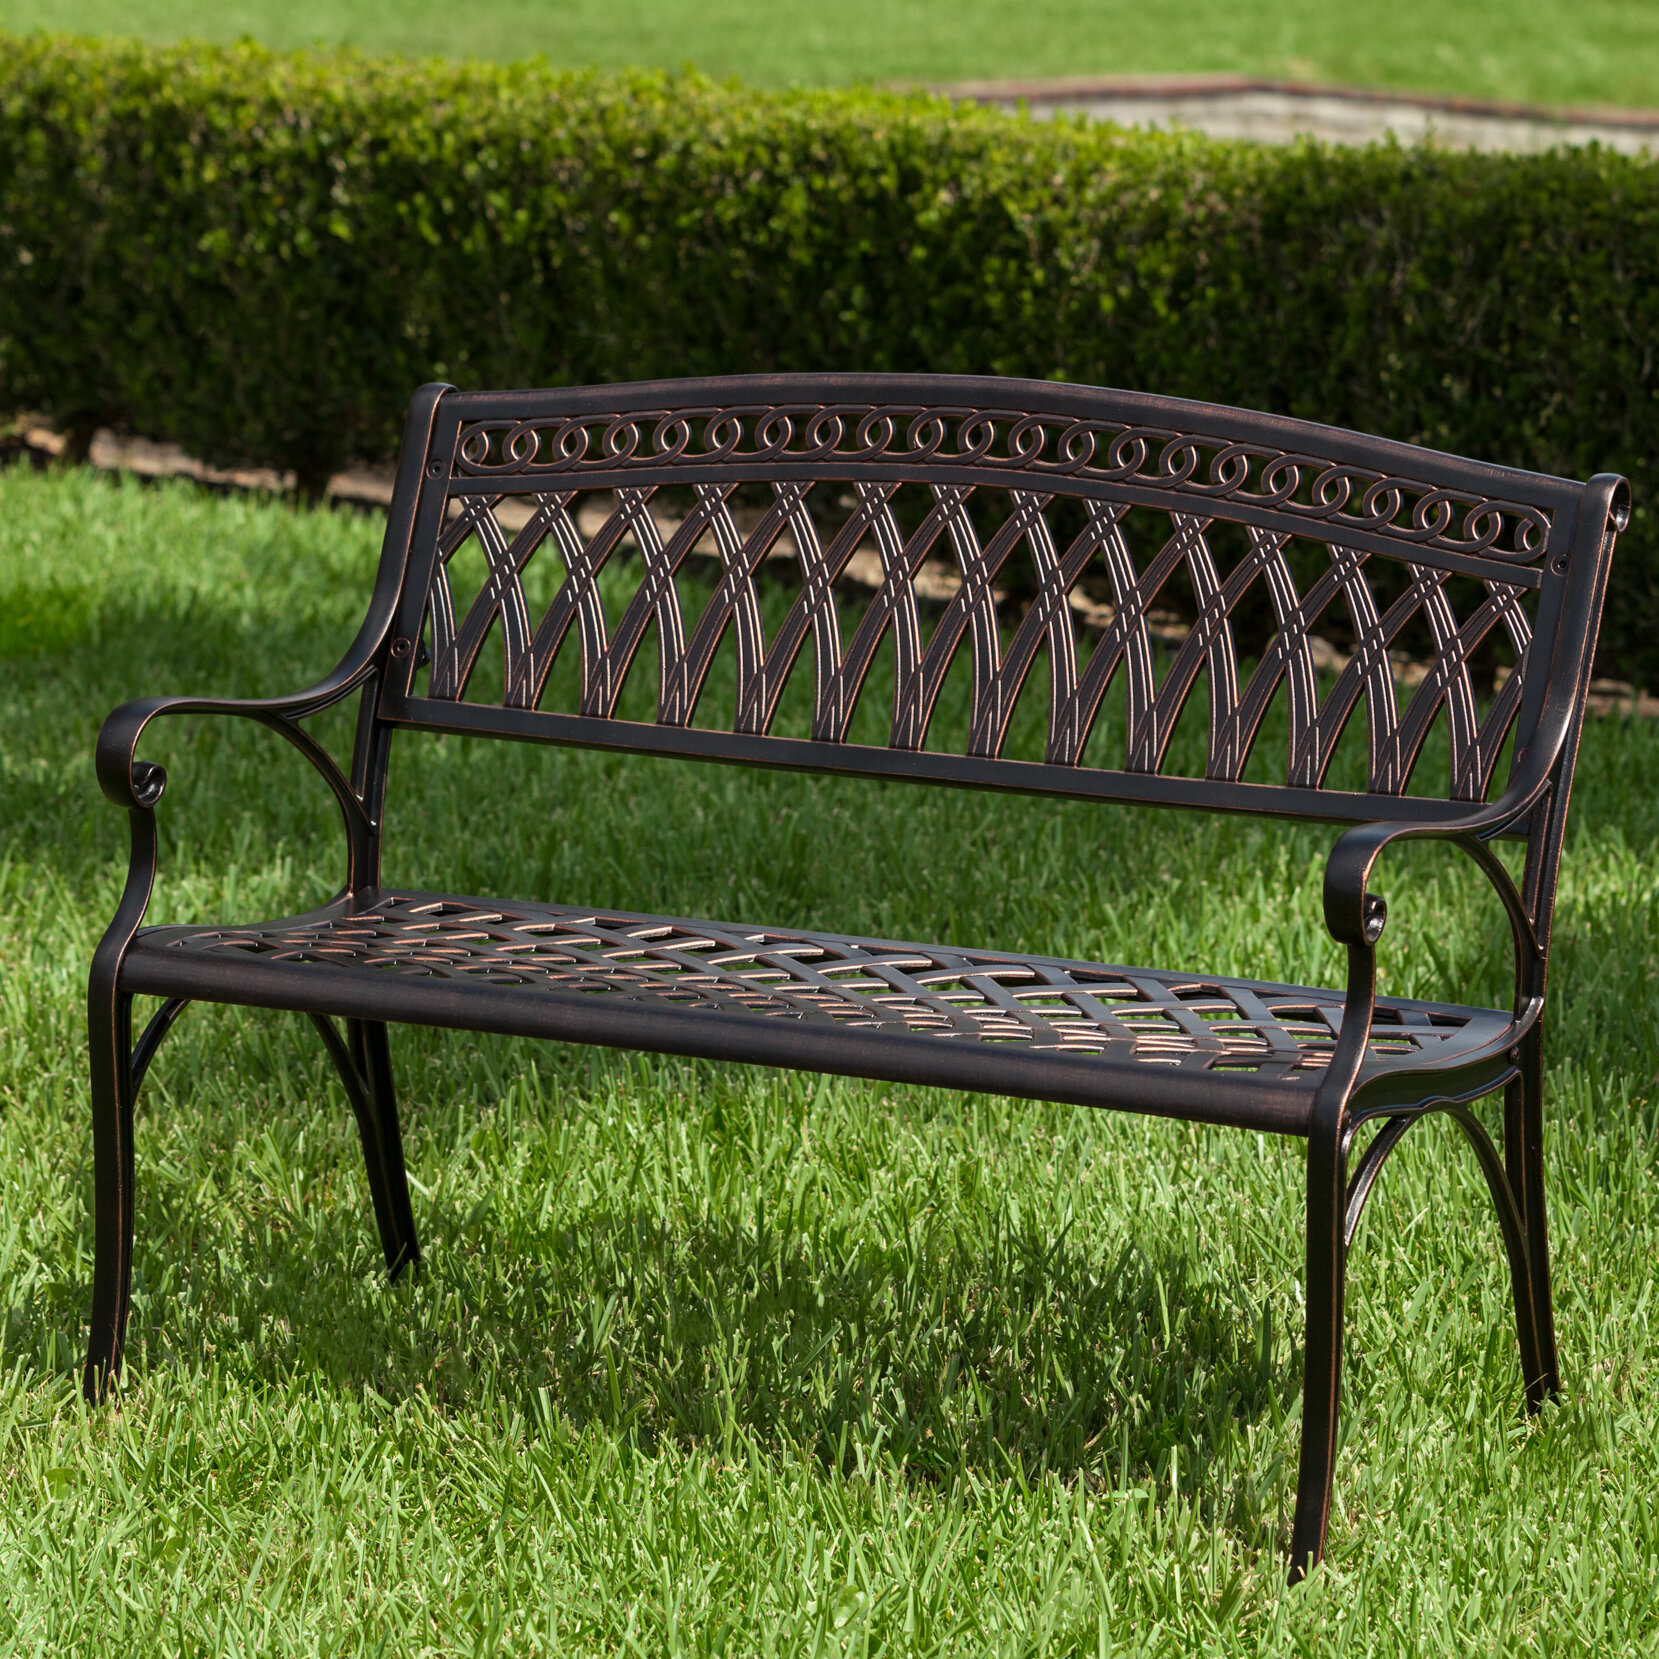 Metal Outdoor Chair Bench